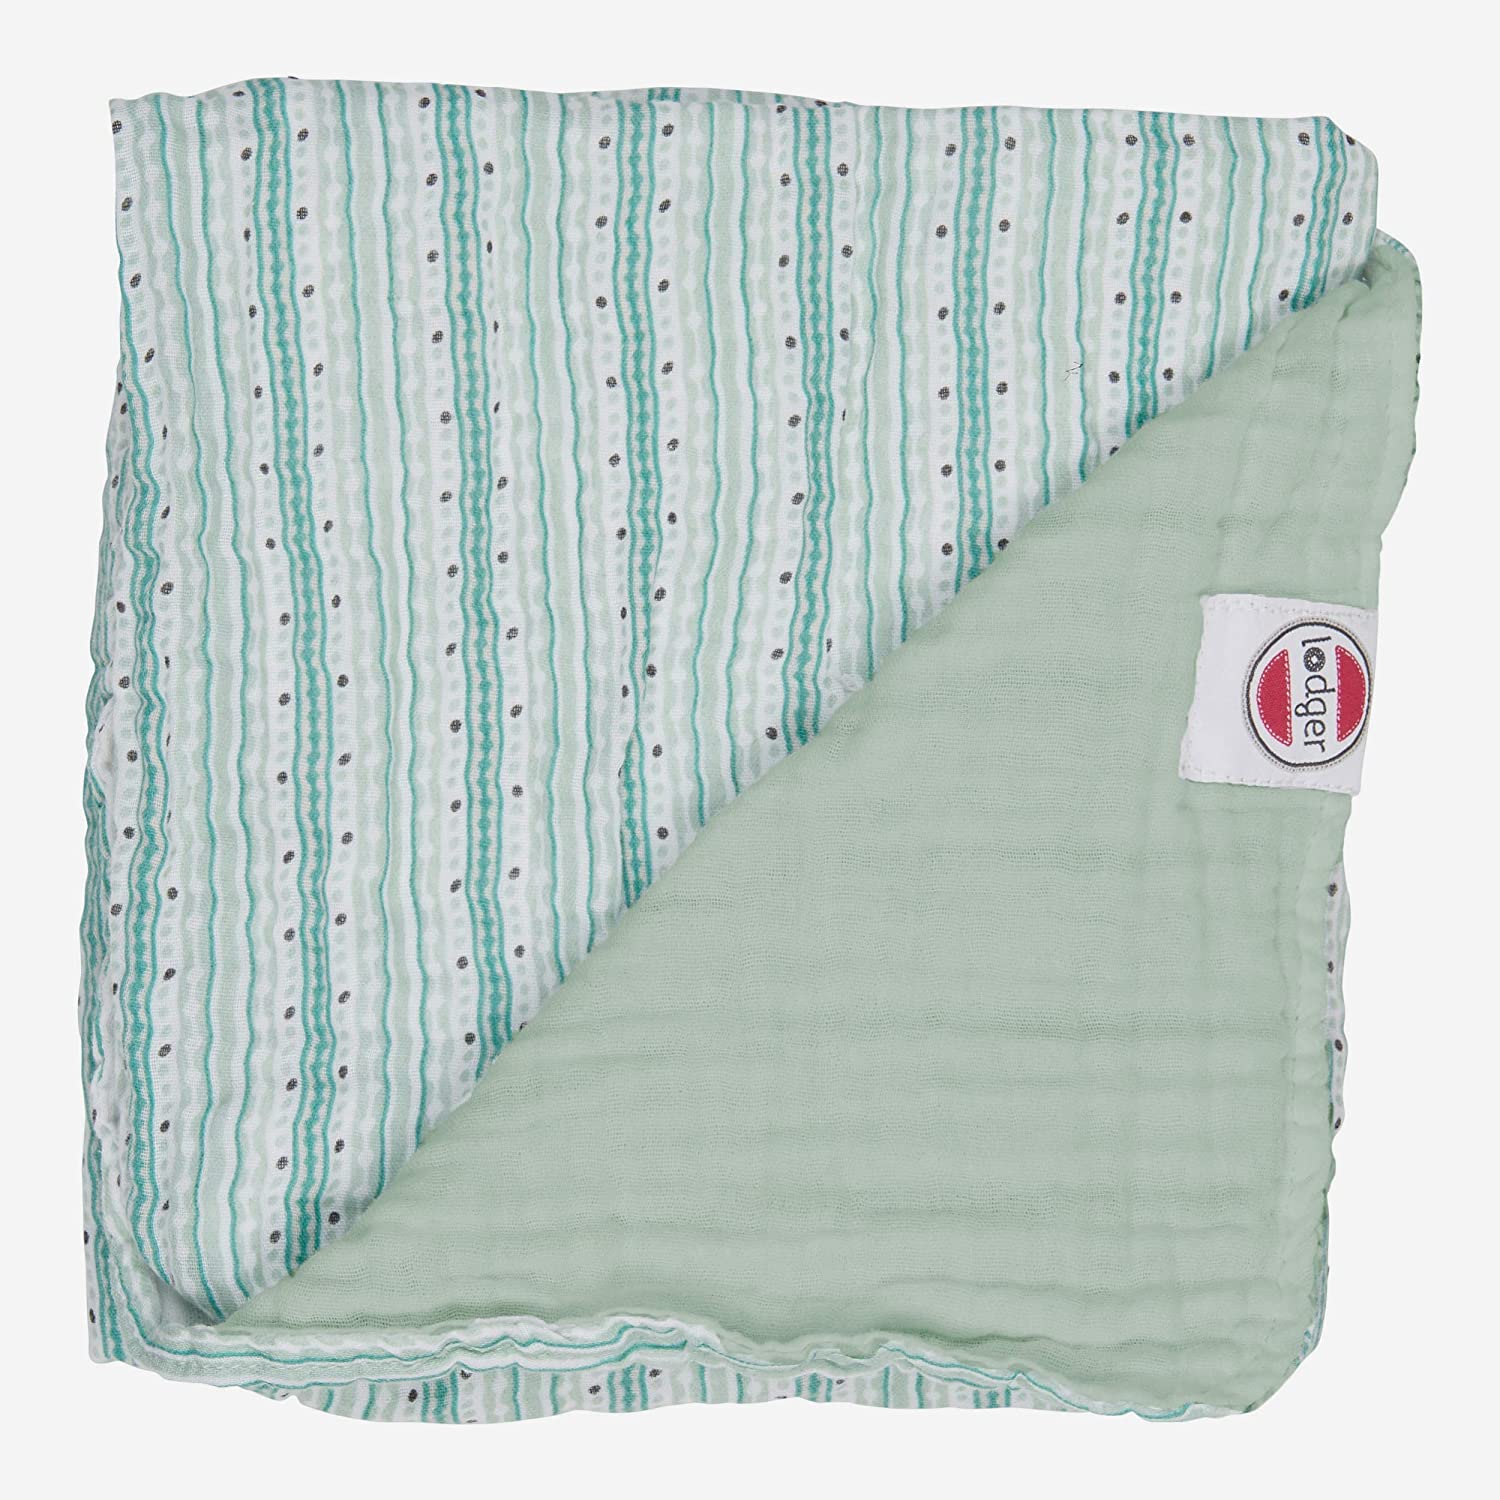 Lodger DM6.7.003 080 120 Dreamer Xandu Stripe Baby Blanket 120 x 120 cm Green